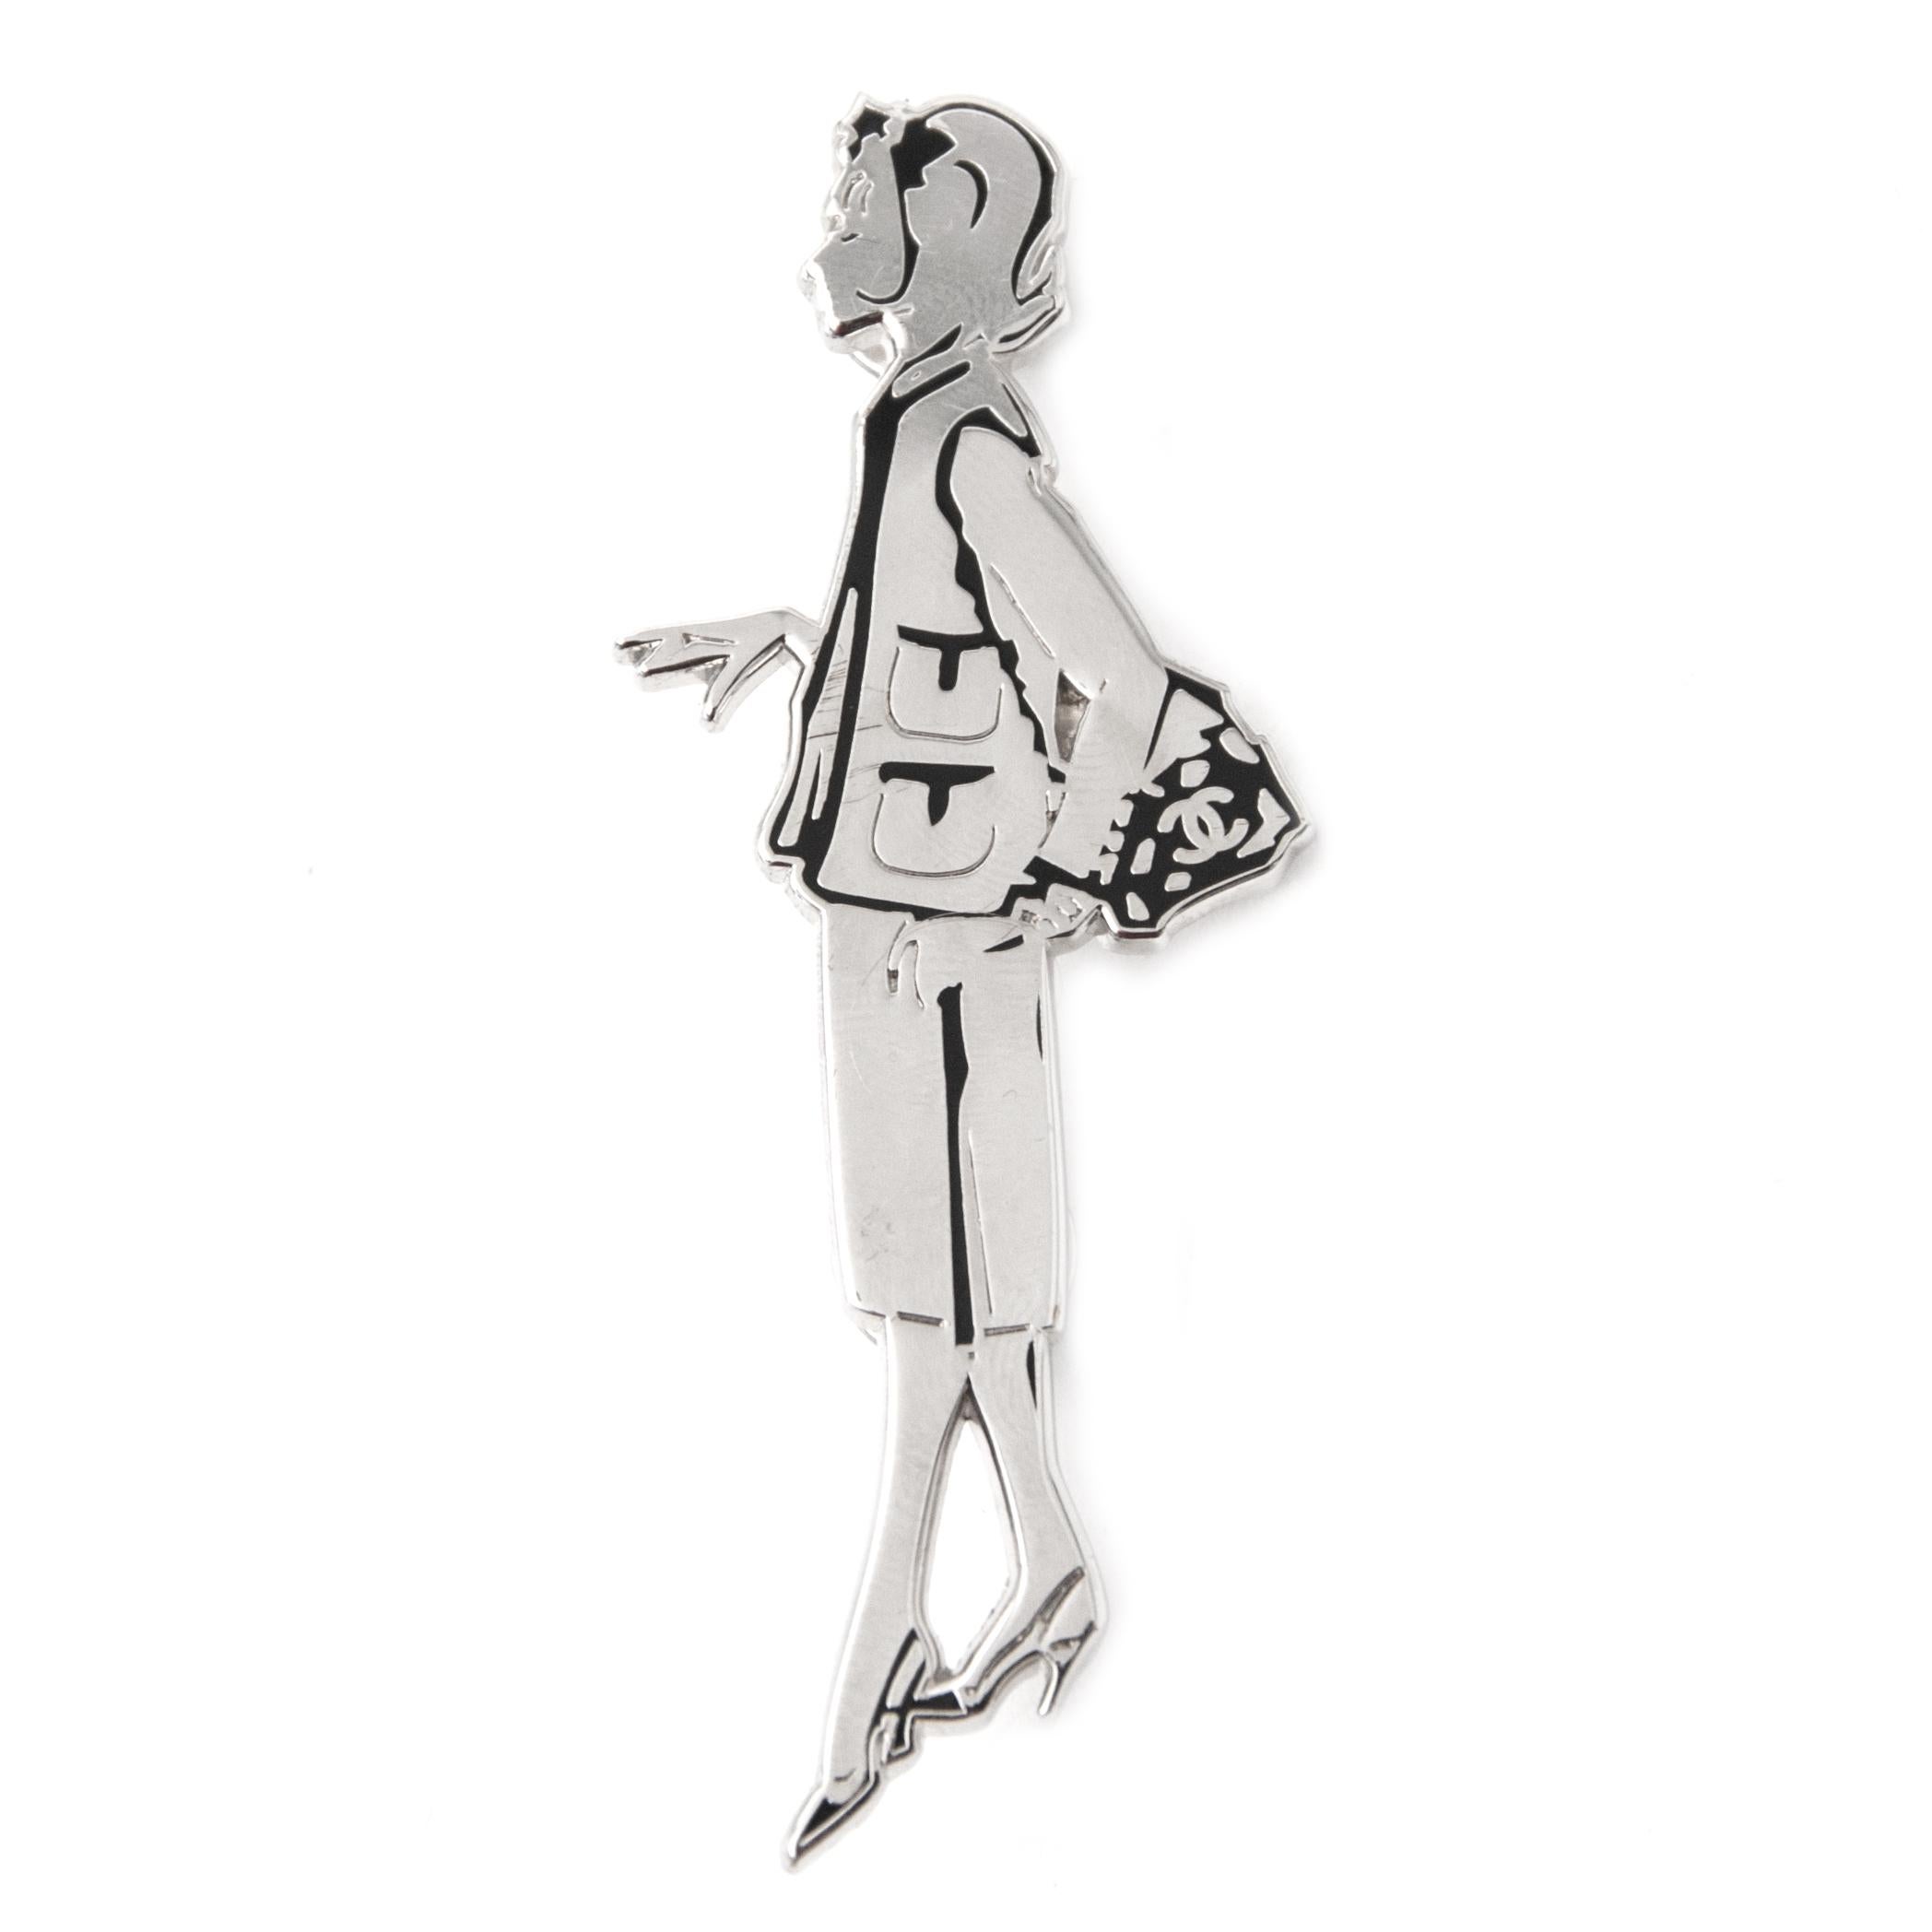 Contemporary Chanel Silver Lady Coco Pin Brooch